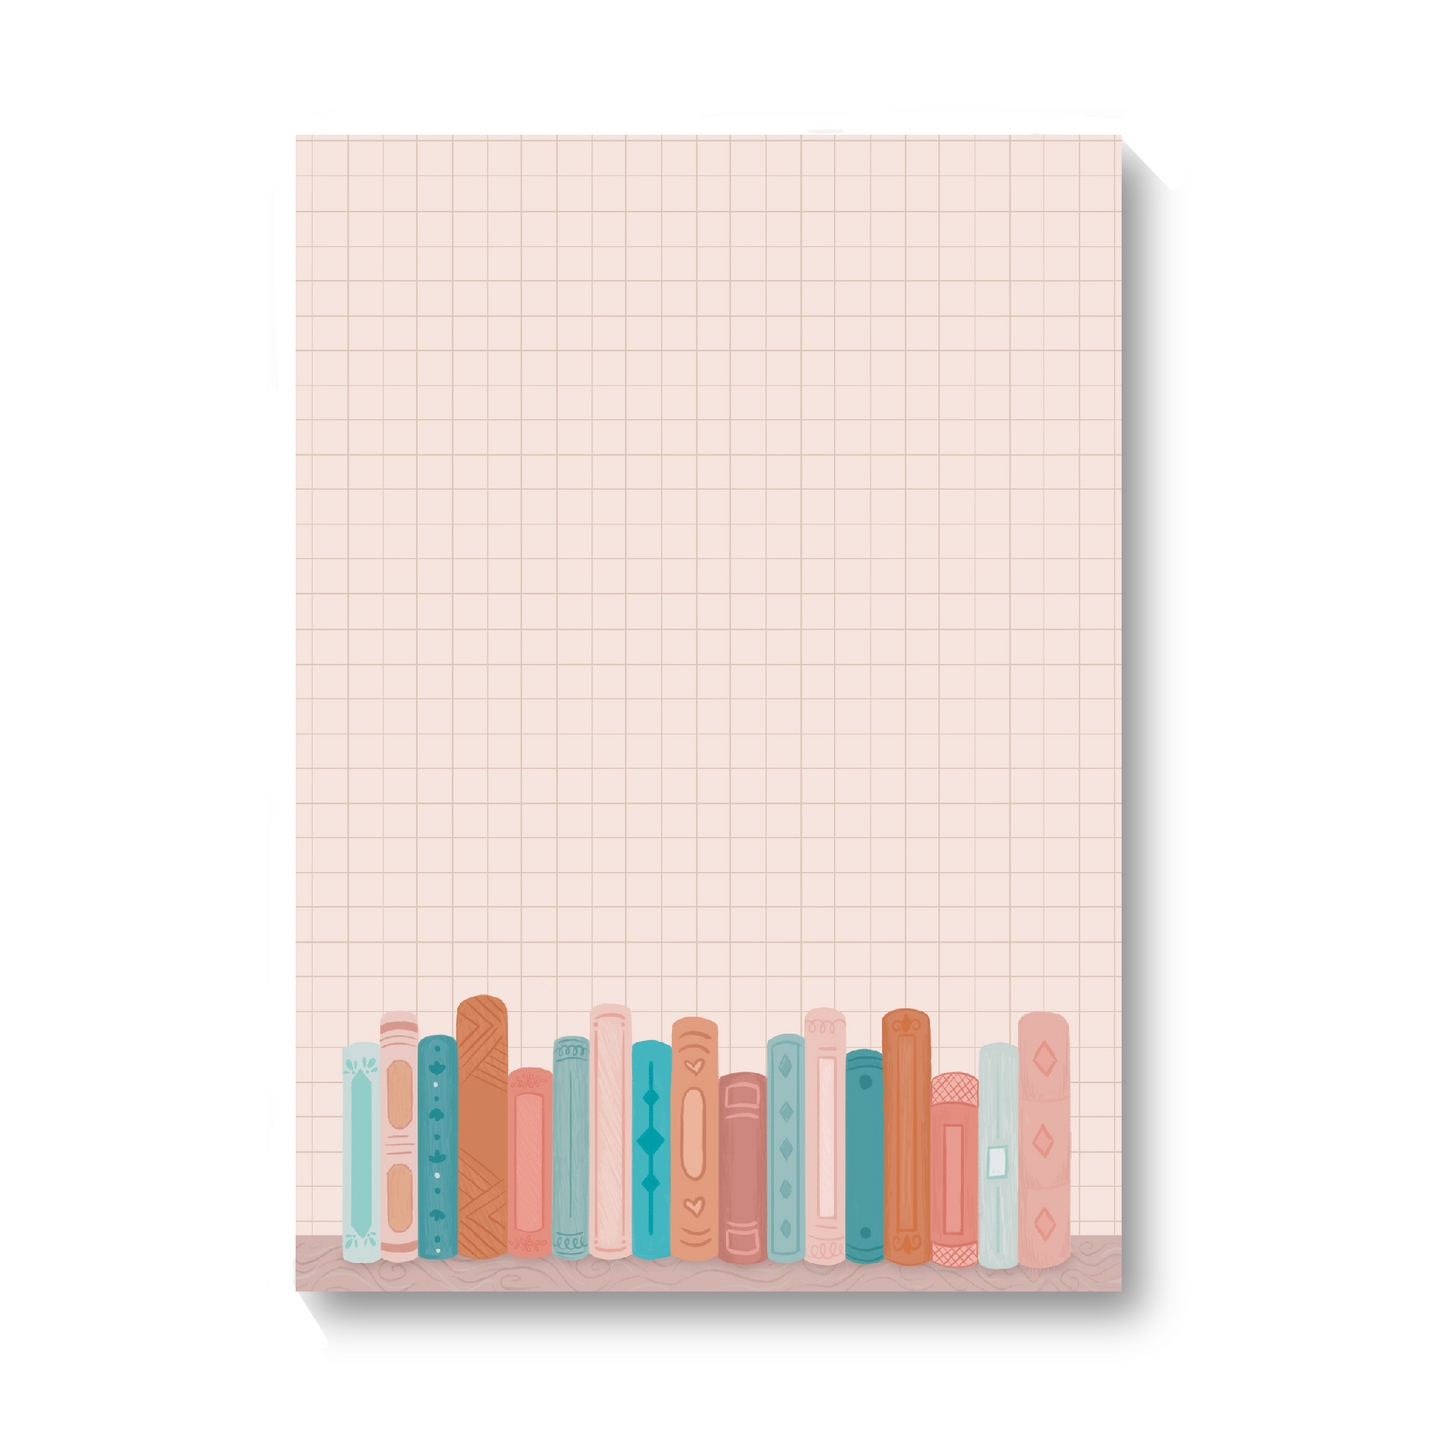 Bookworm Grid Notepad